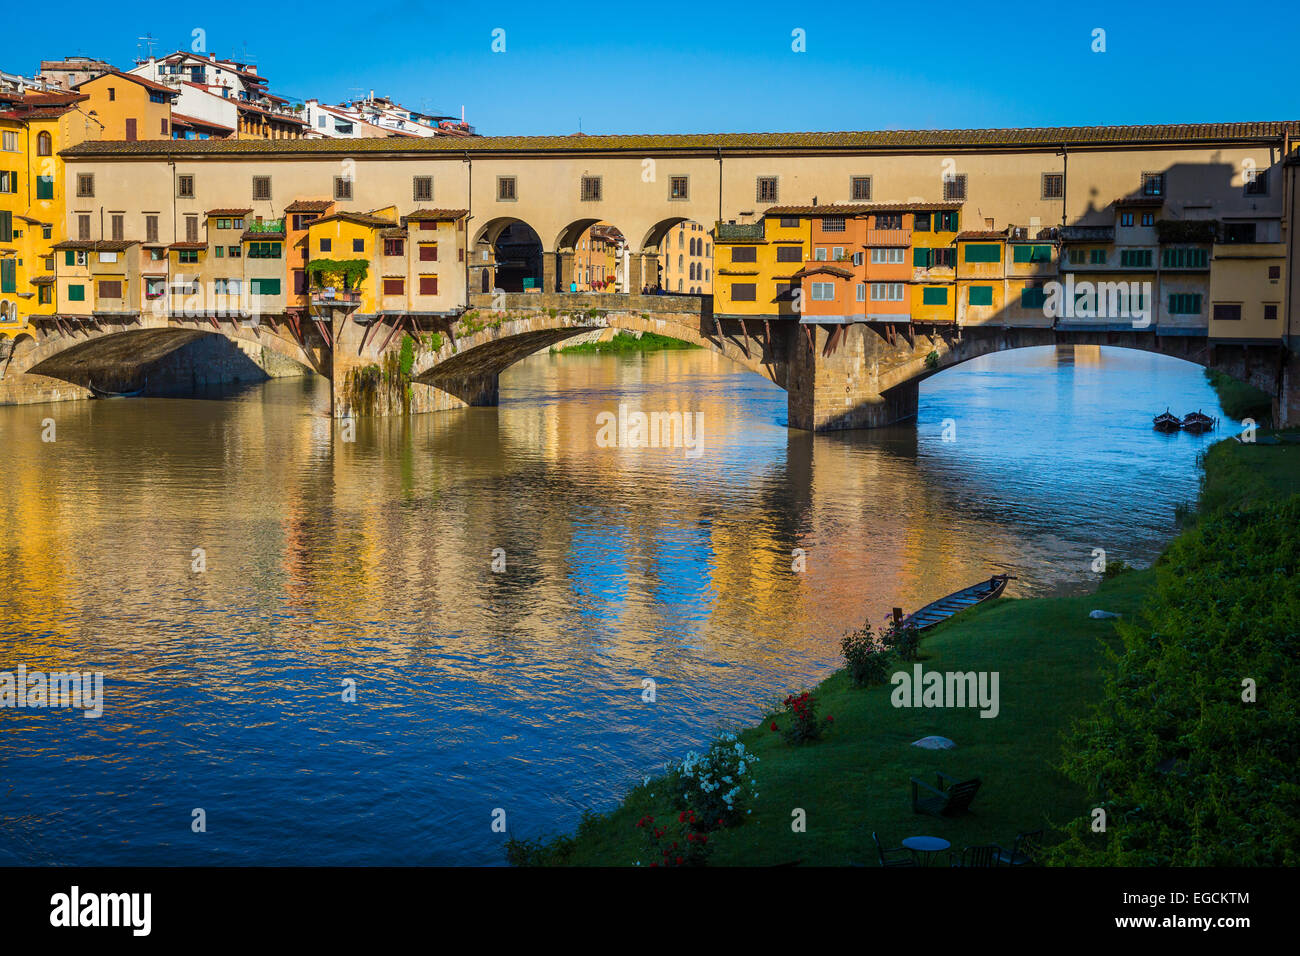 The river Arno and Ponte Vecchio bridge in Firenze (Florence), Italy. Stock Photo